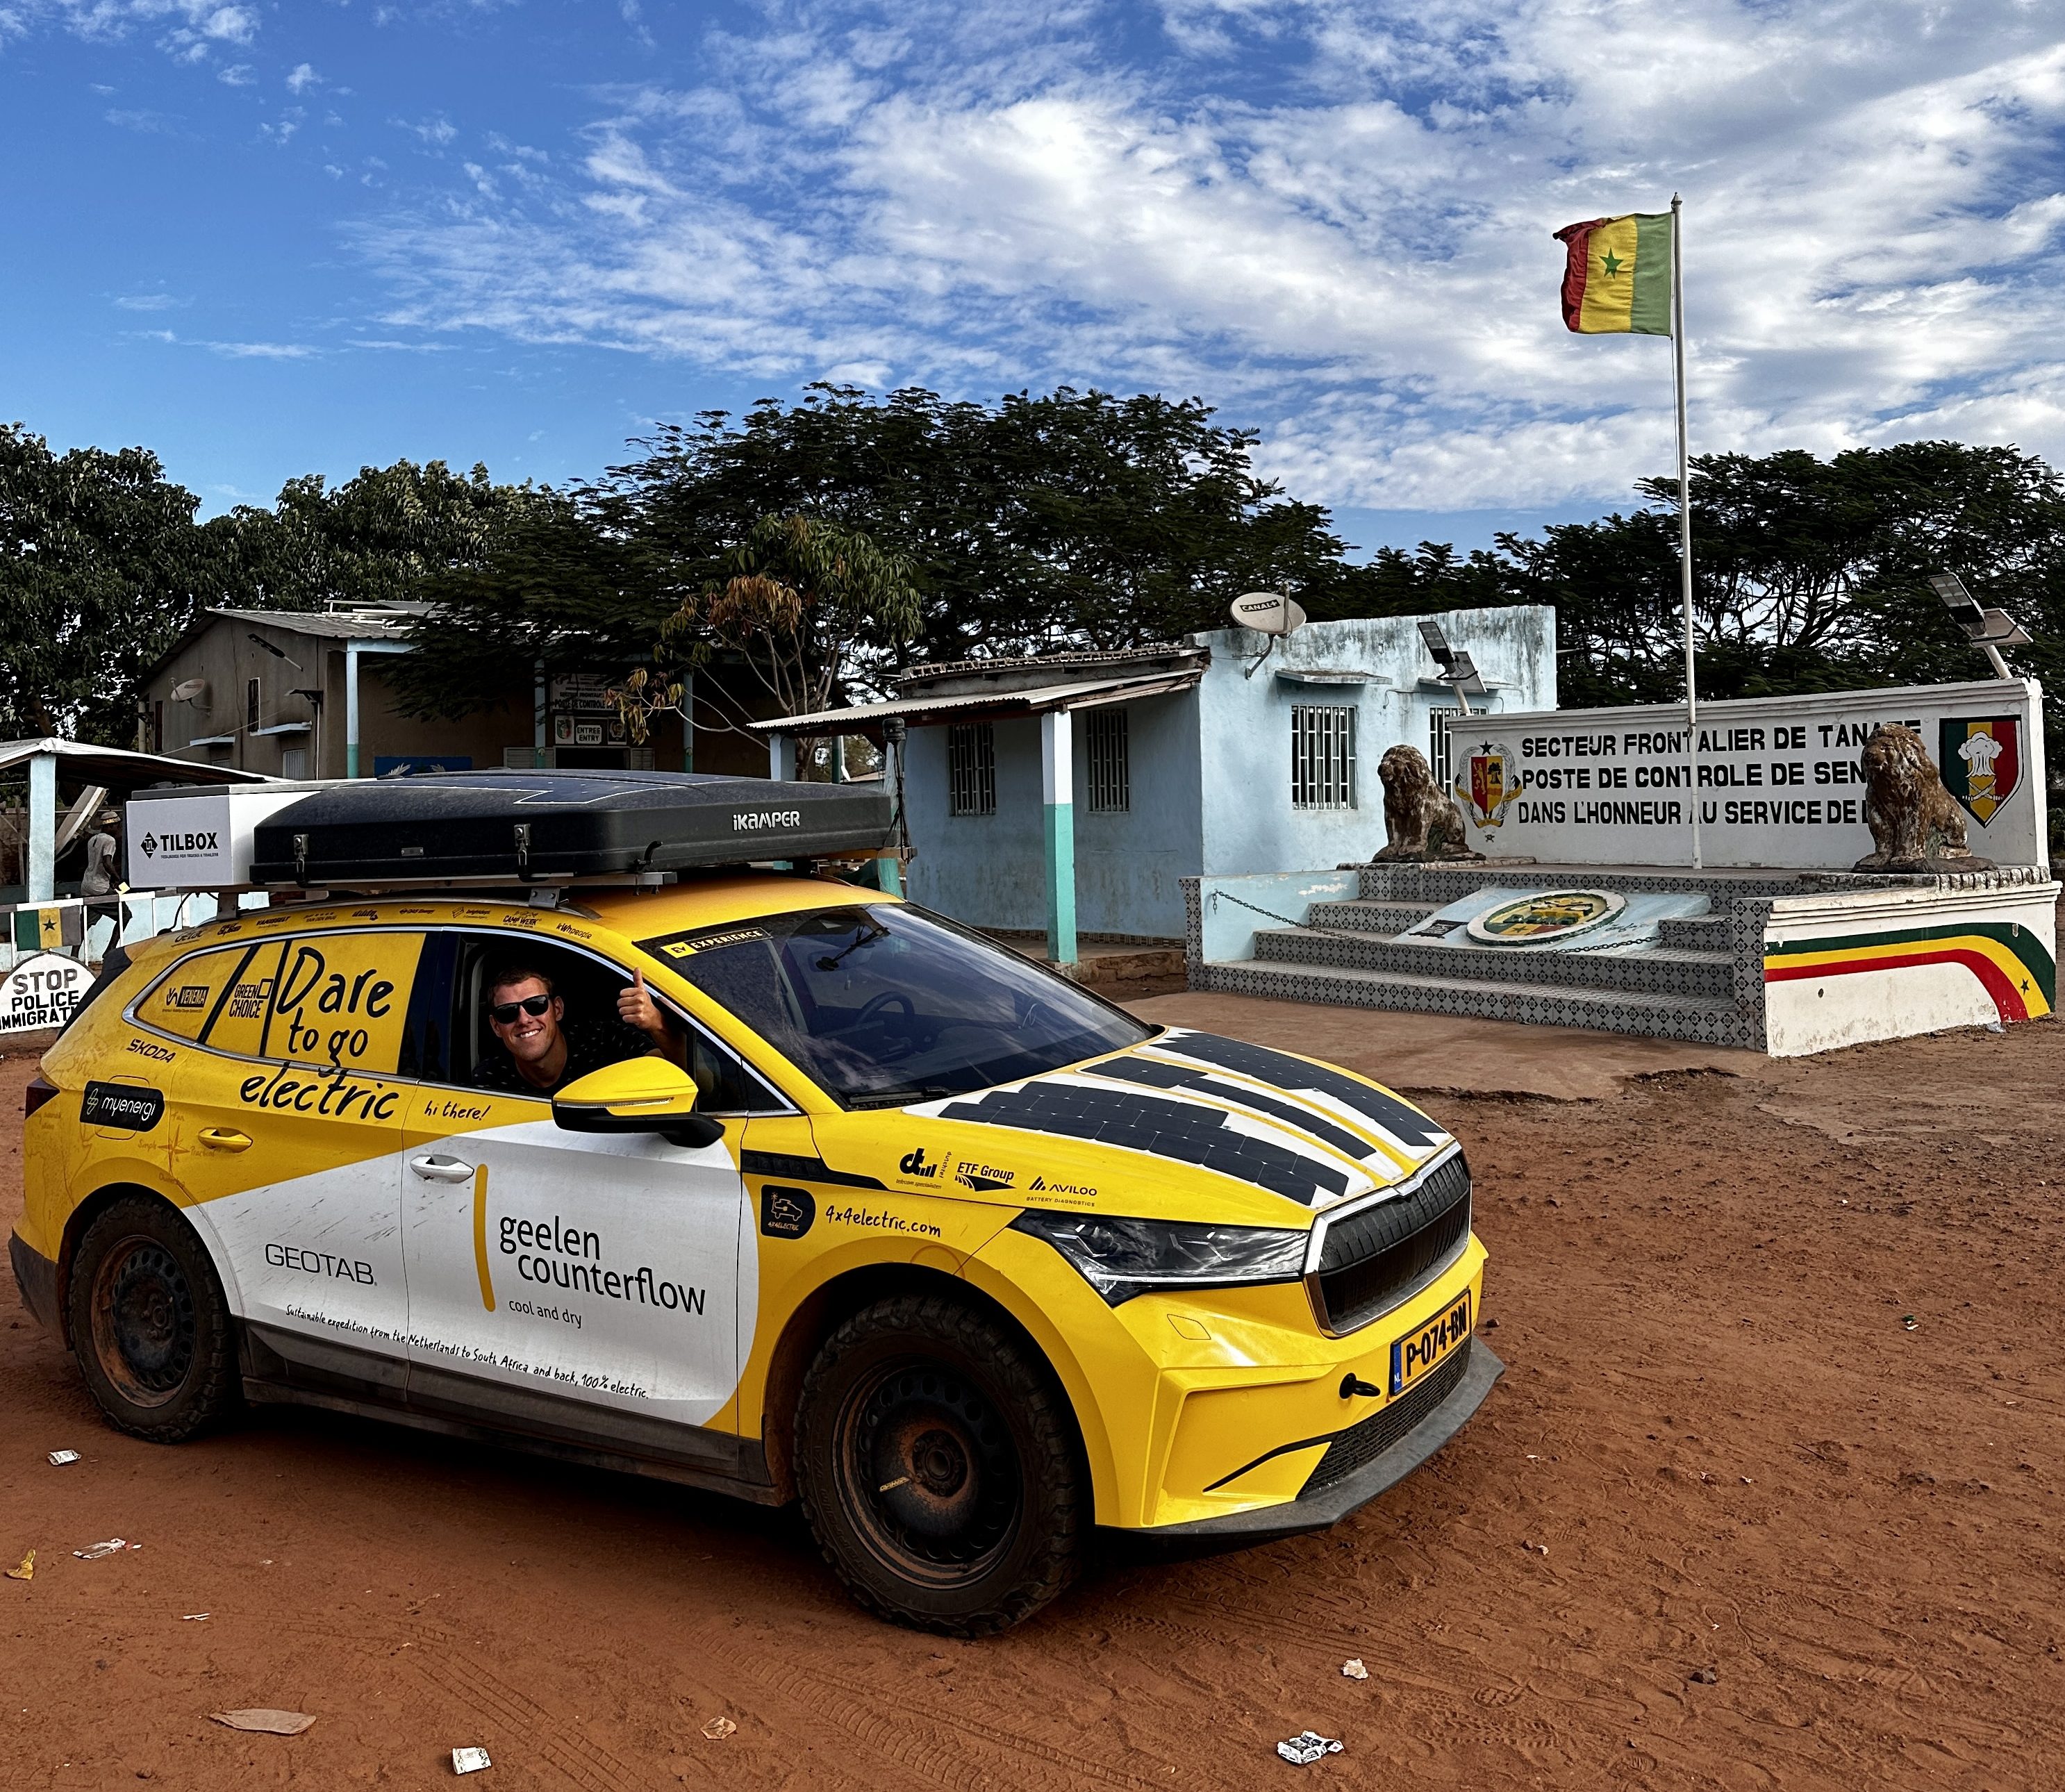 africa solar car